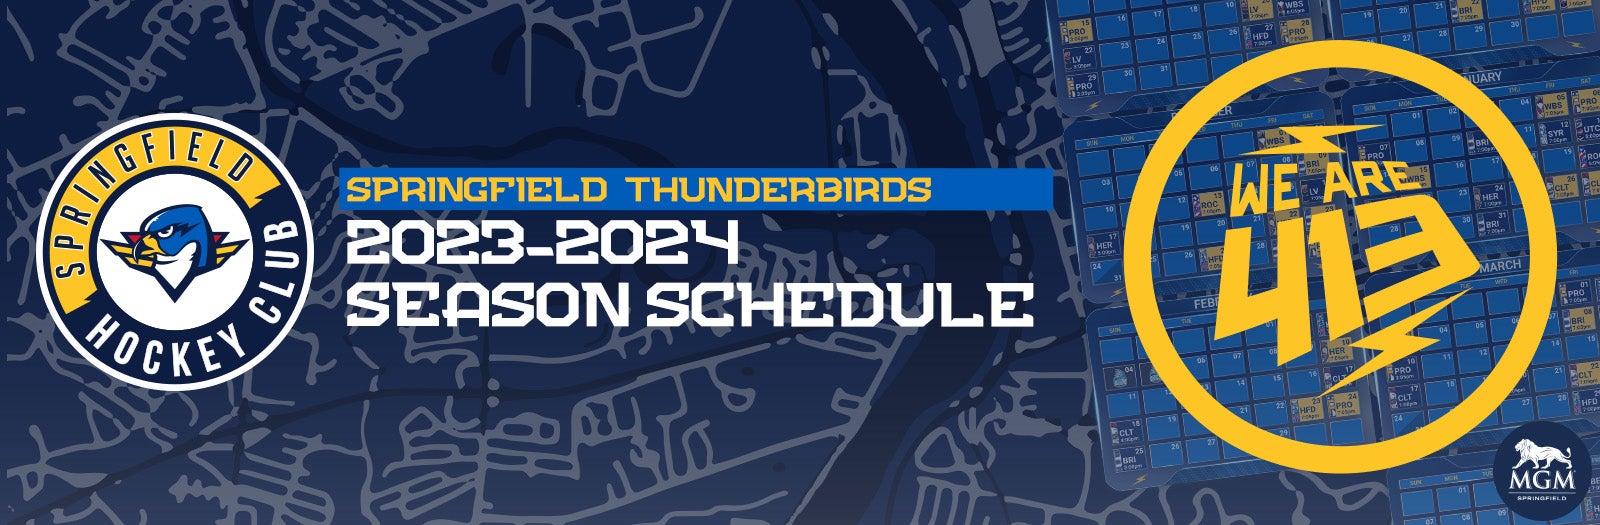 Springfield Thunderbirds (Ice-O-Topes) vs. Bridgeport Islanders on